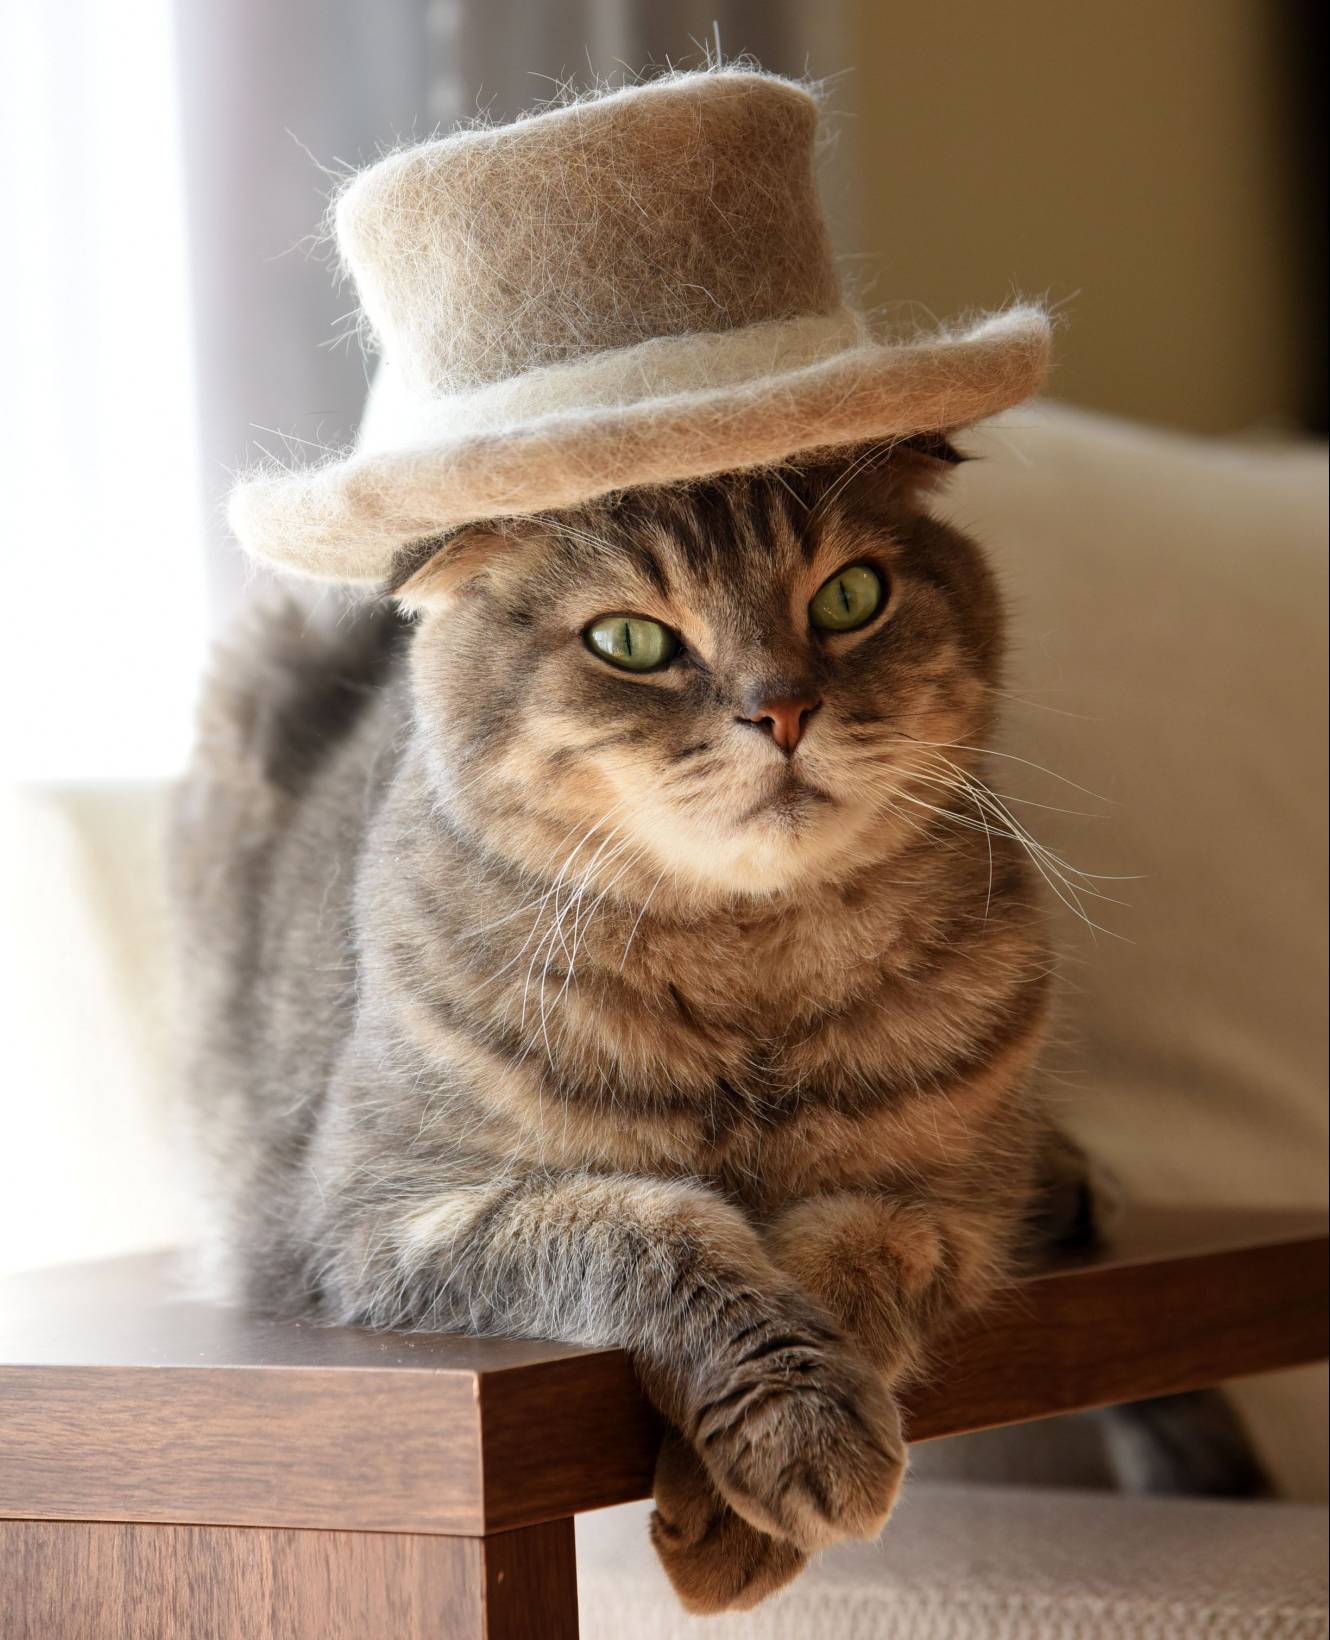 Japanese Student In Fuzzy Cat Ear Hat w/ Comme Ca Du Mode Coat